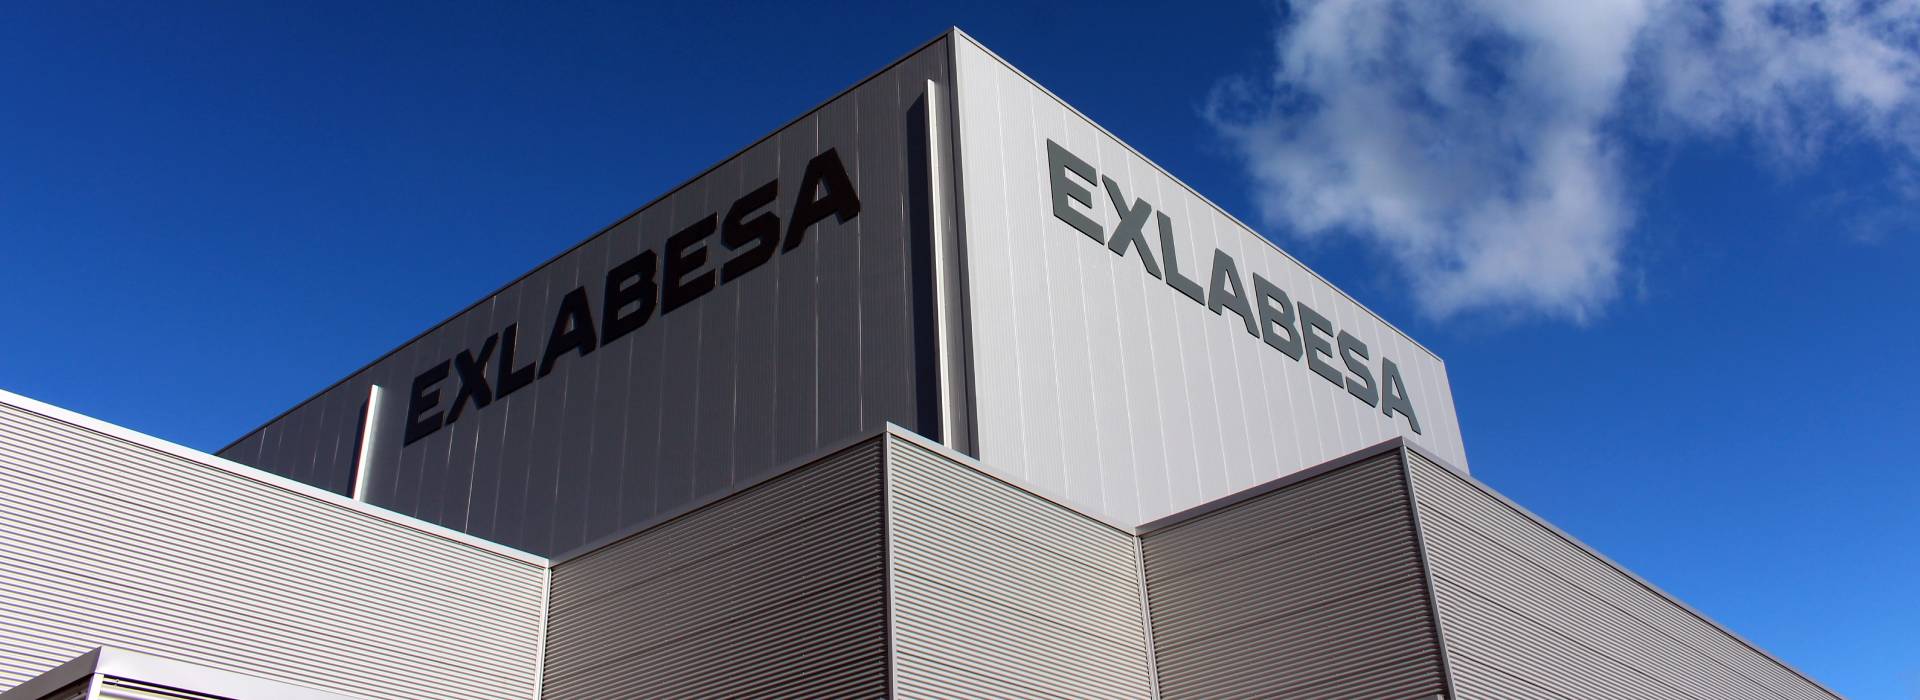 EXLABESA announces the acquisition of the French extrusion company FLANDRIA ALUMINIUM